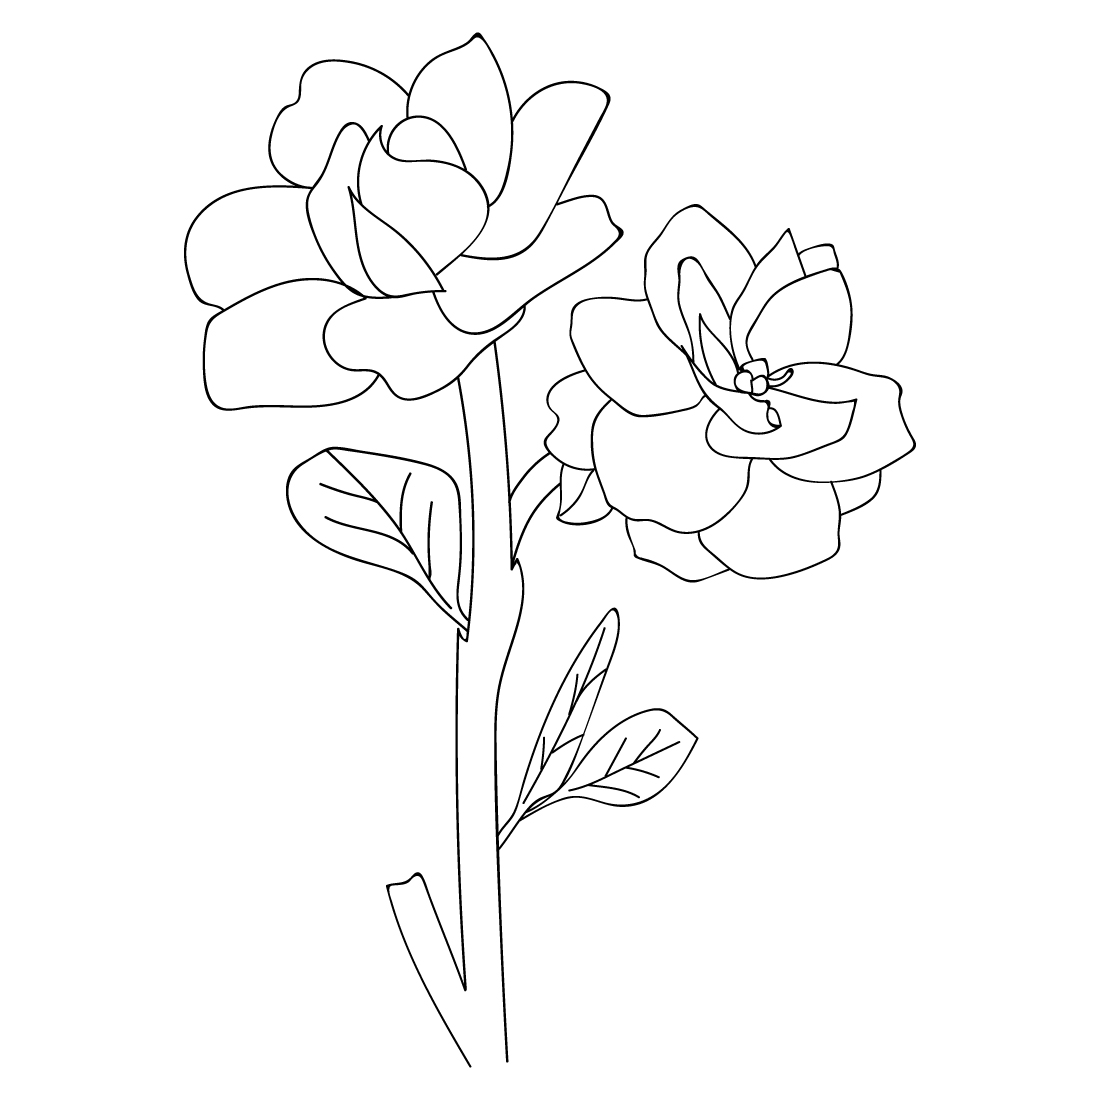 gardenia flower outline drawing, gardenia flower line art, gardenia flower illustration, gardania flower vector art preview image.